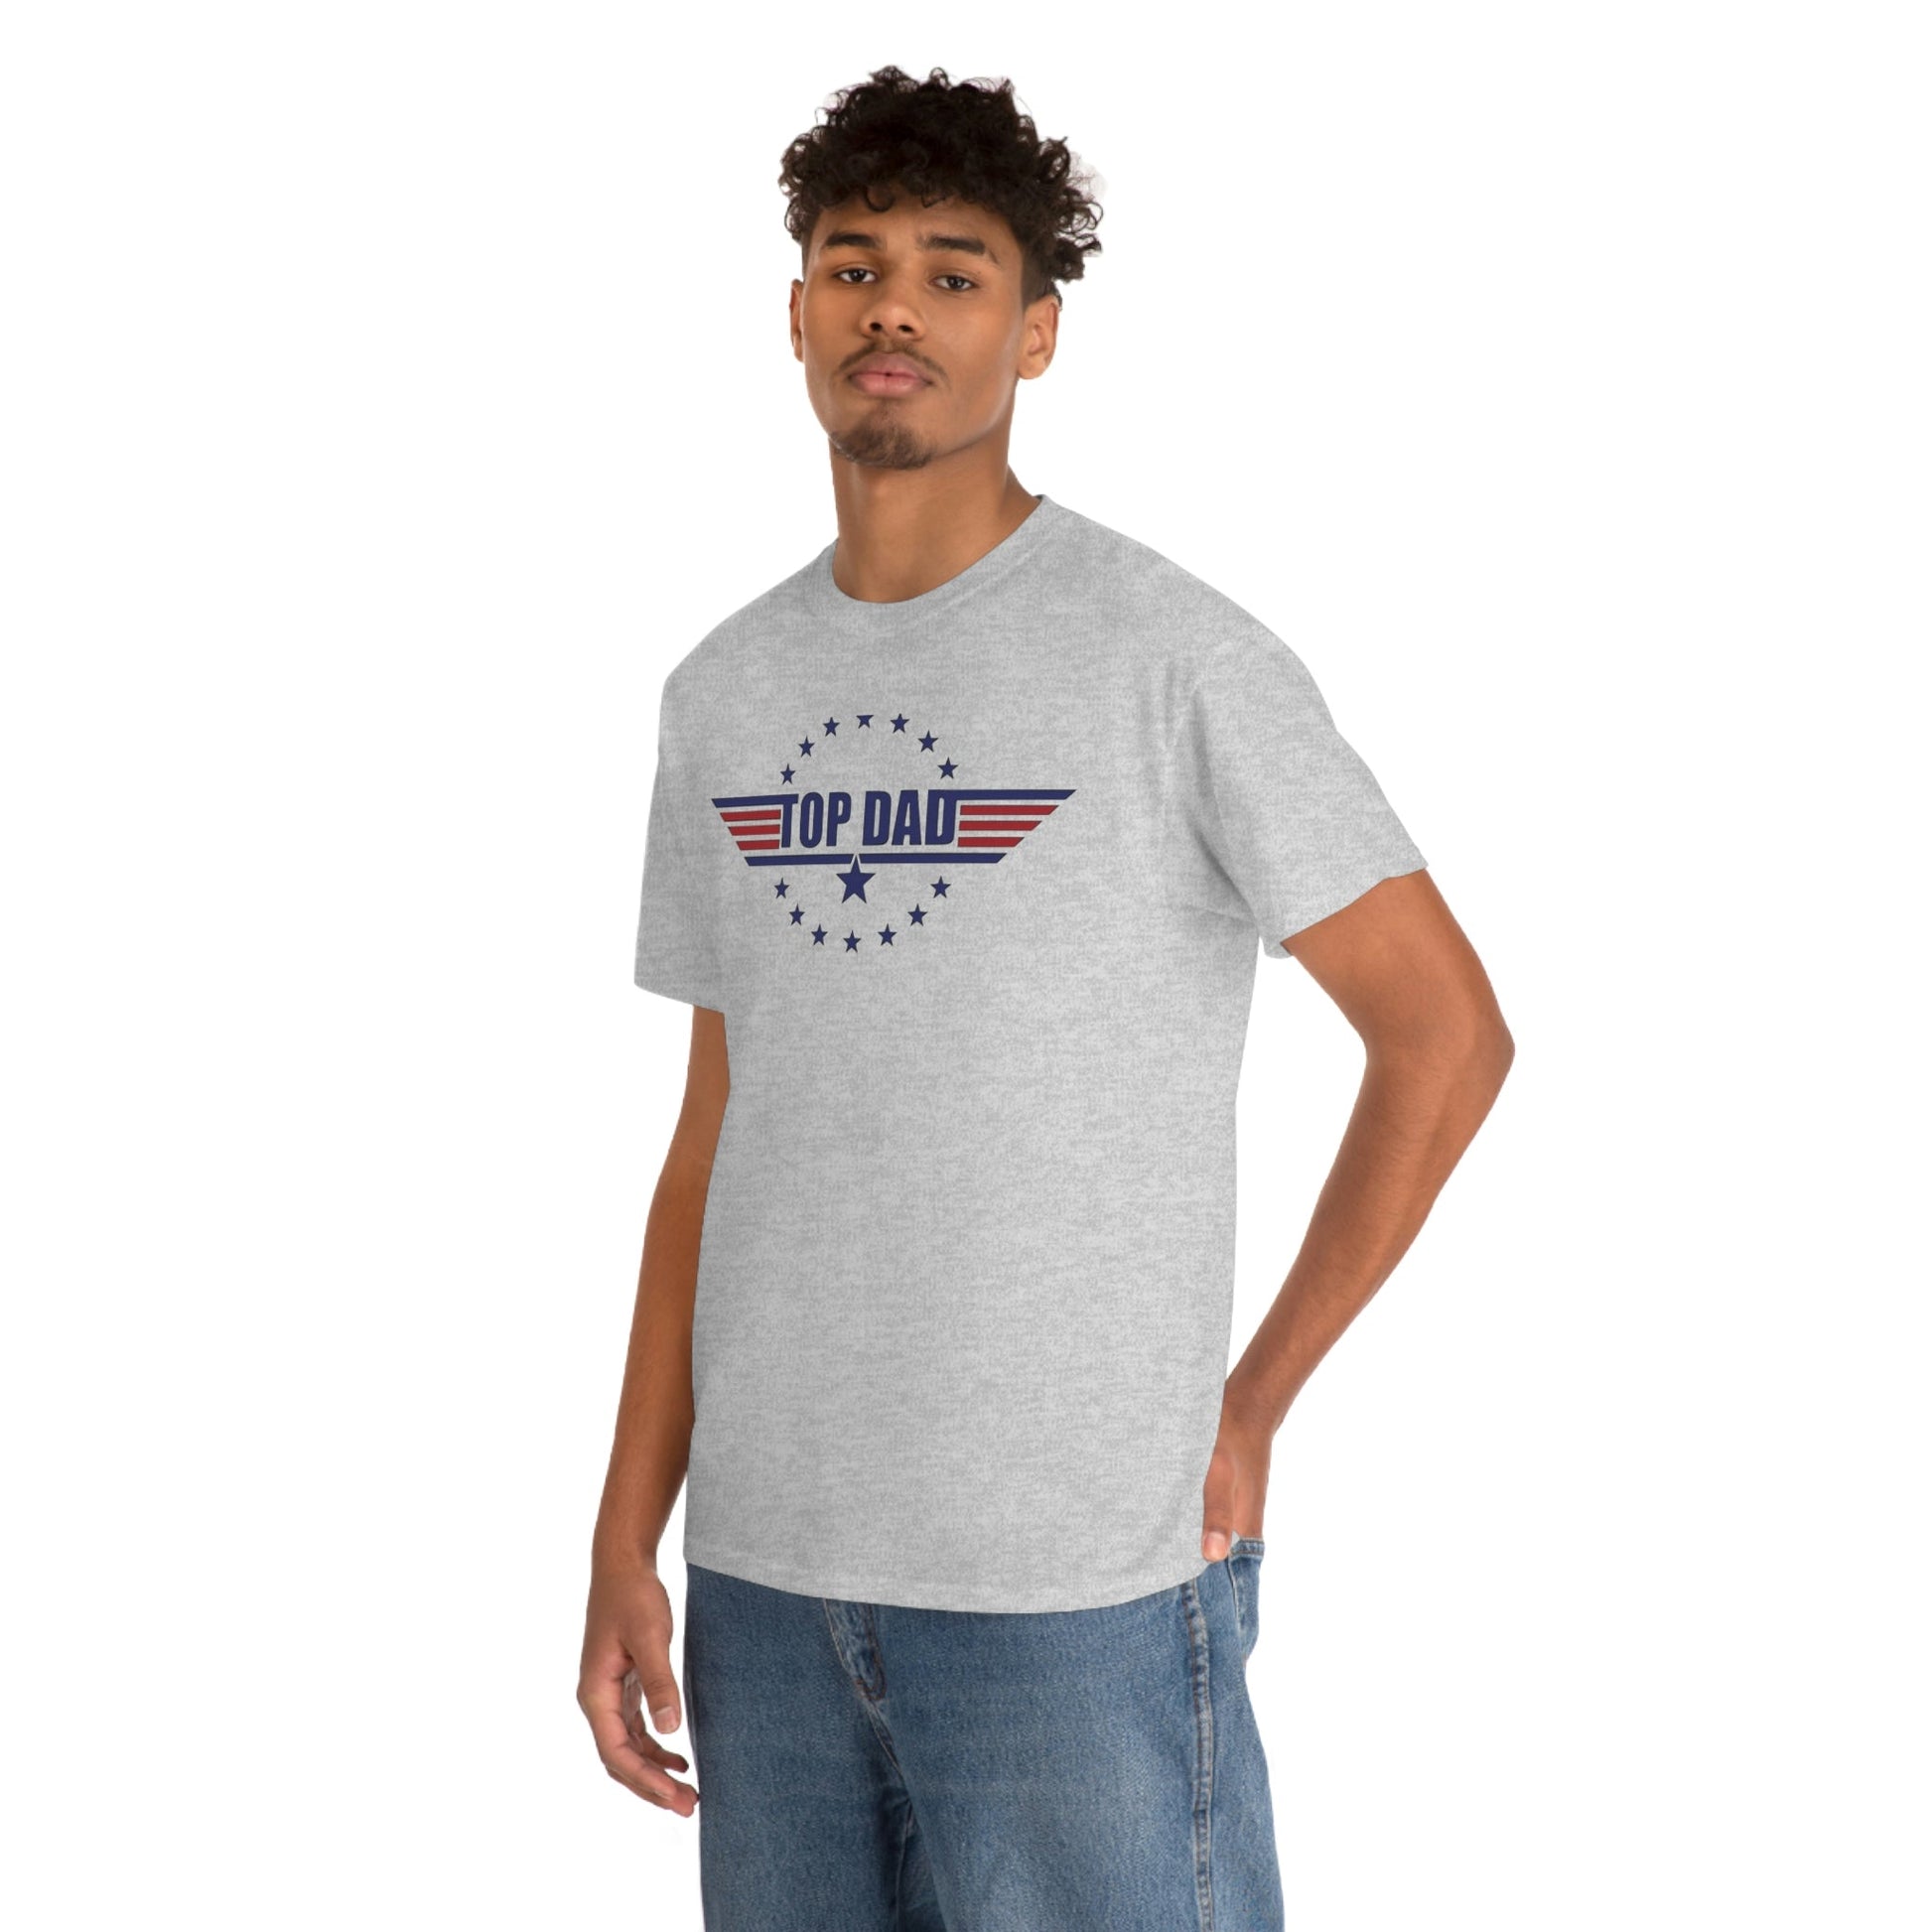 Top Dad T-Shirt - RetroTeeShop